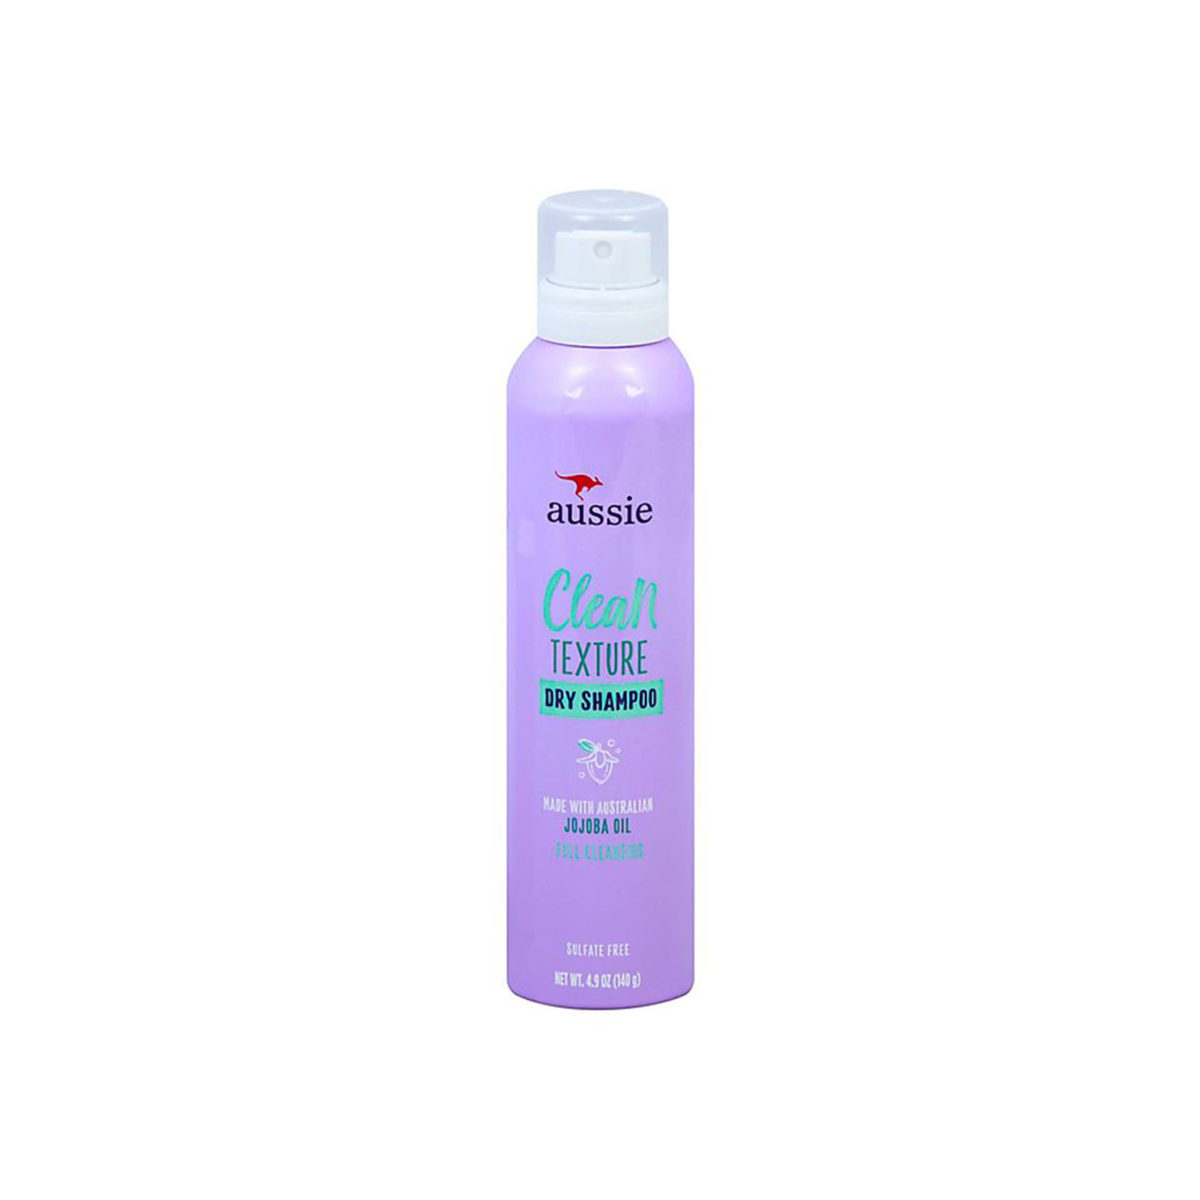 Aussie - Clean Texture Dry Shampoo